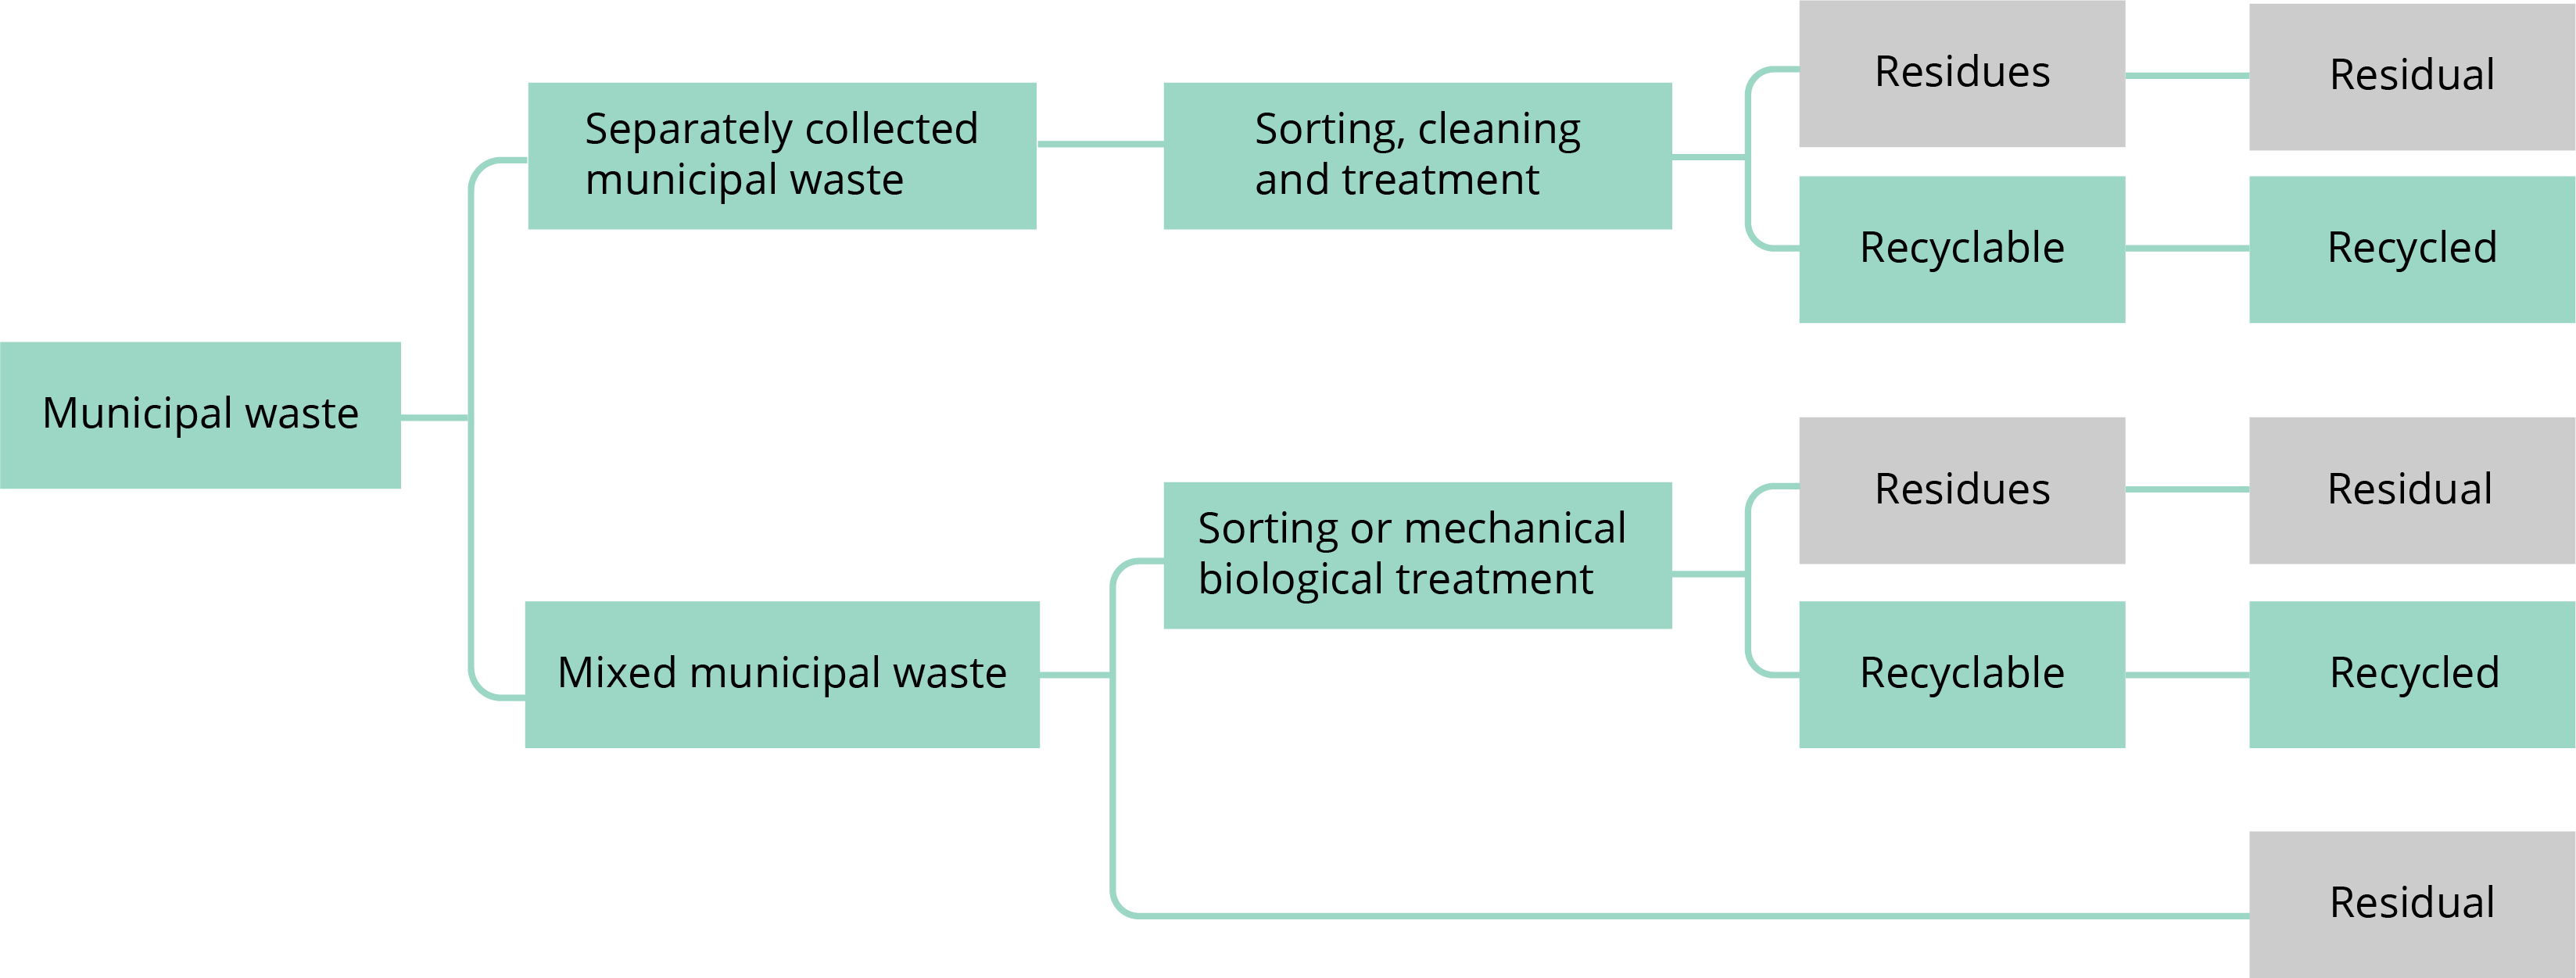 Figure 2. Simplified municipal waste pathways